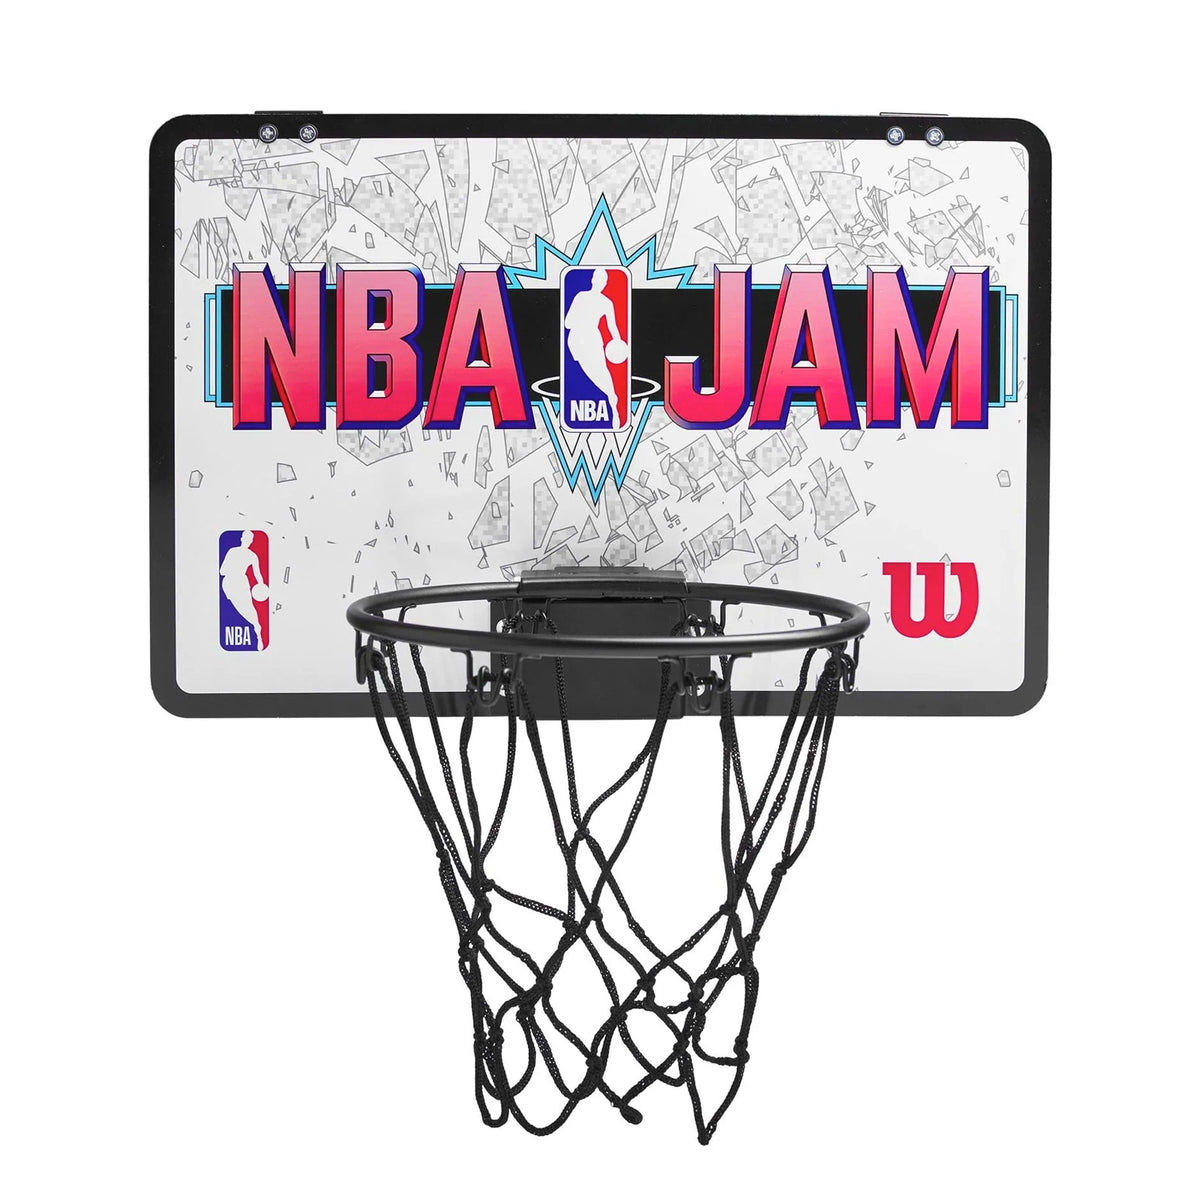 NBA Jam Mini Hoop